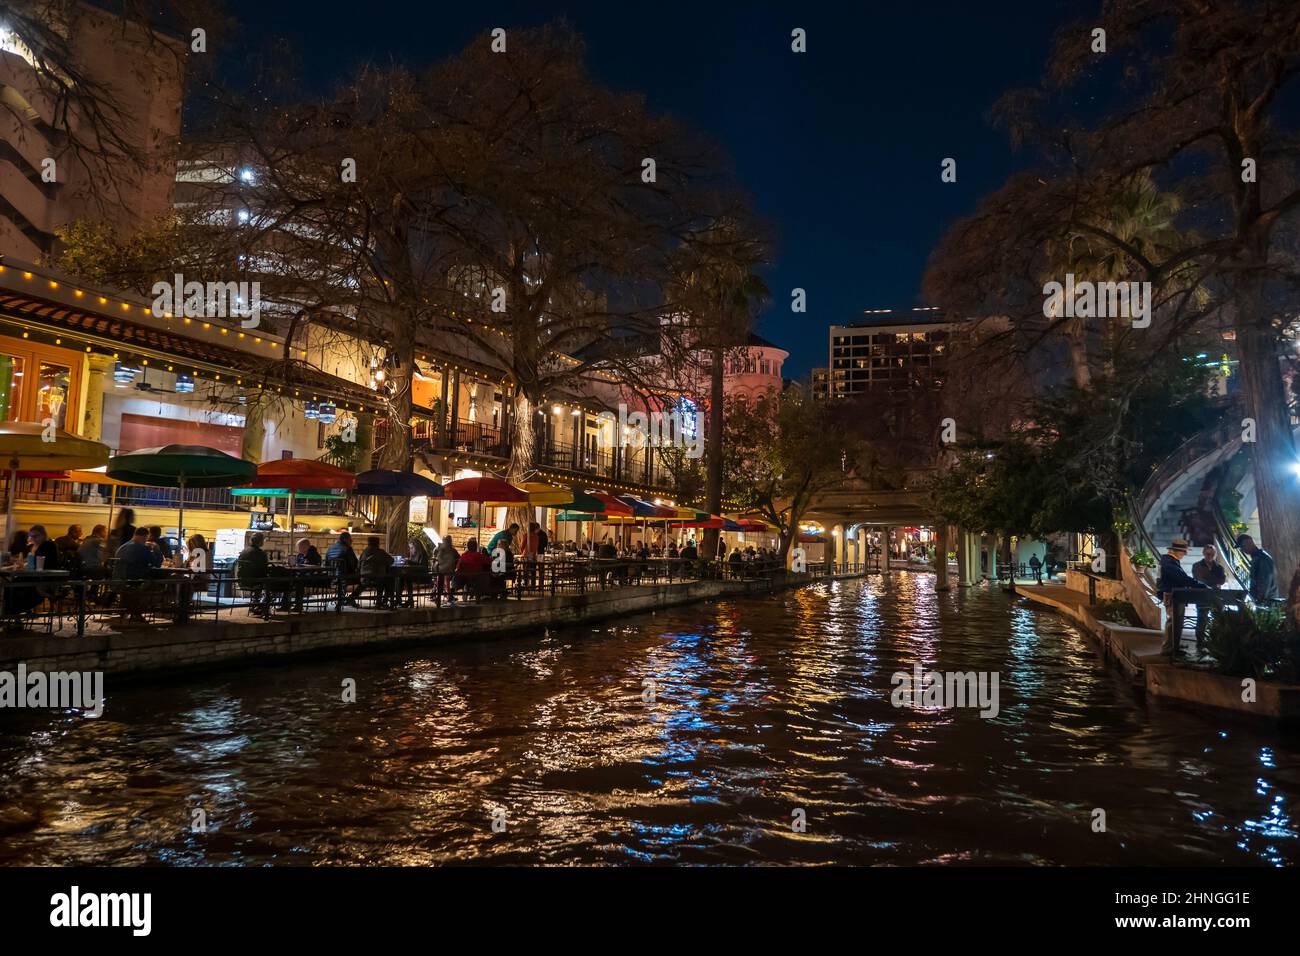 SAN ANTONIO, TX - 23 JAN 2020: The riverwalk at night with people enjoying themselves along the river. Stock Photo